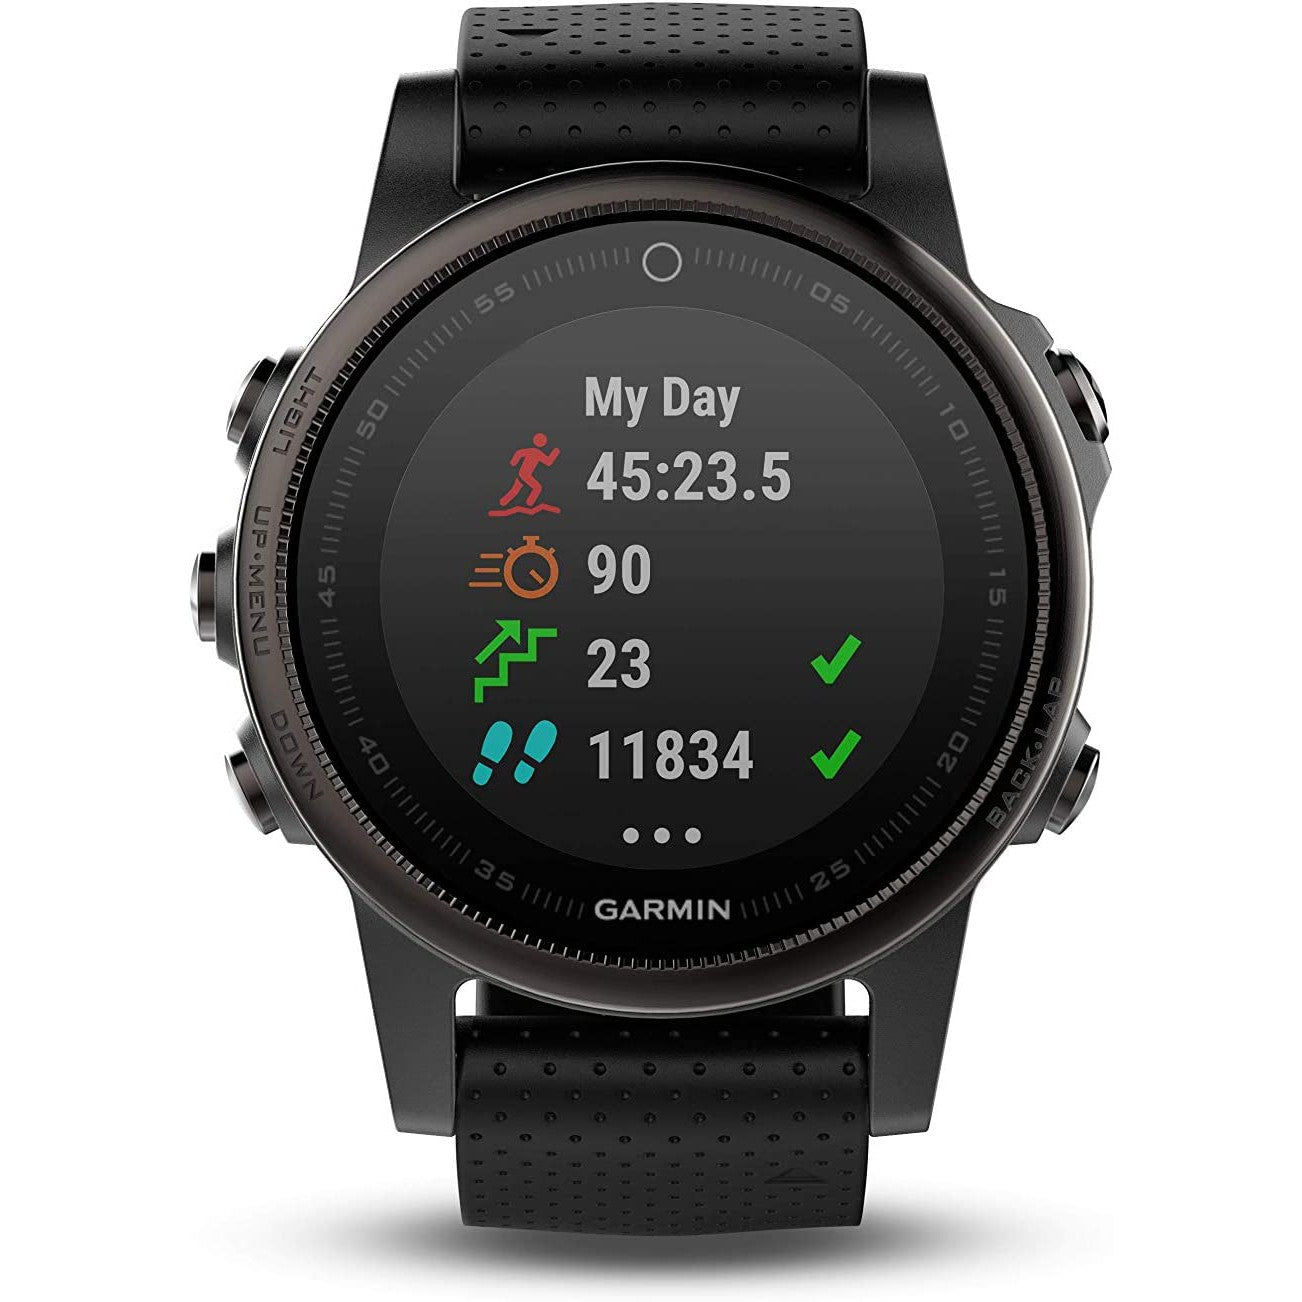 Garmin Fenix 5S Multisport GPS Watch - Black - Refurbished Excellent